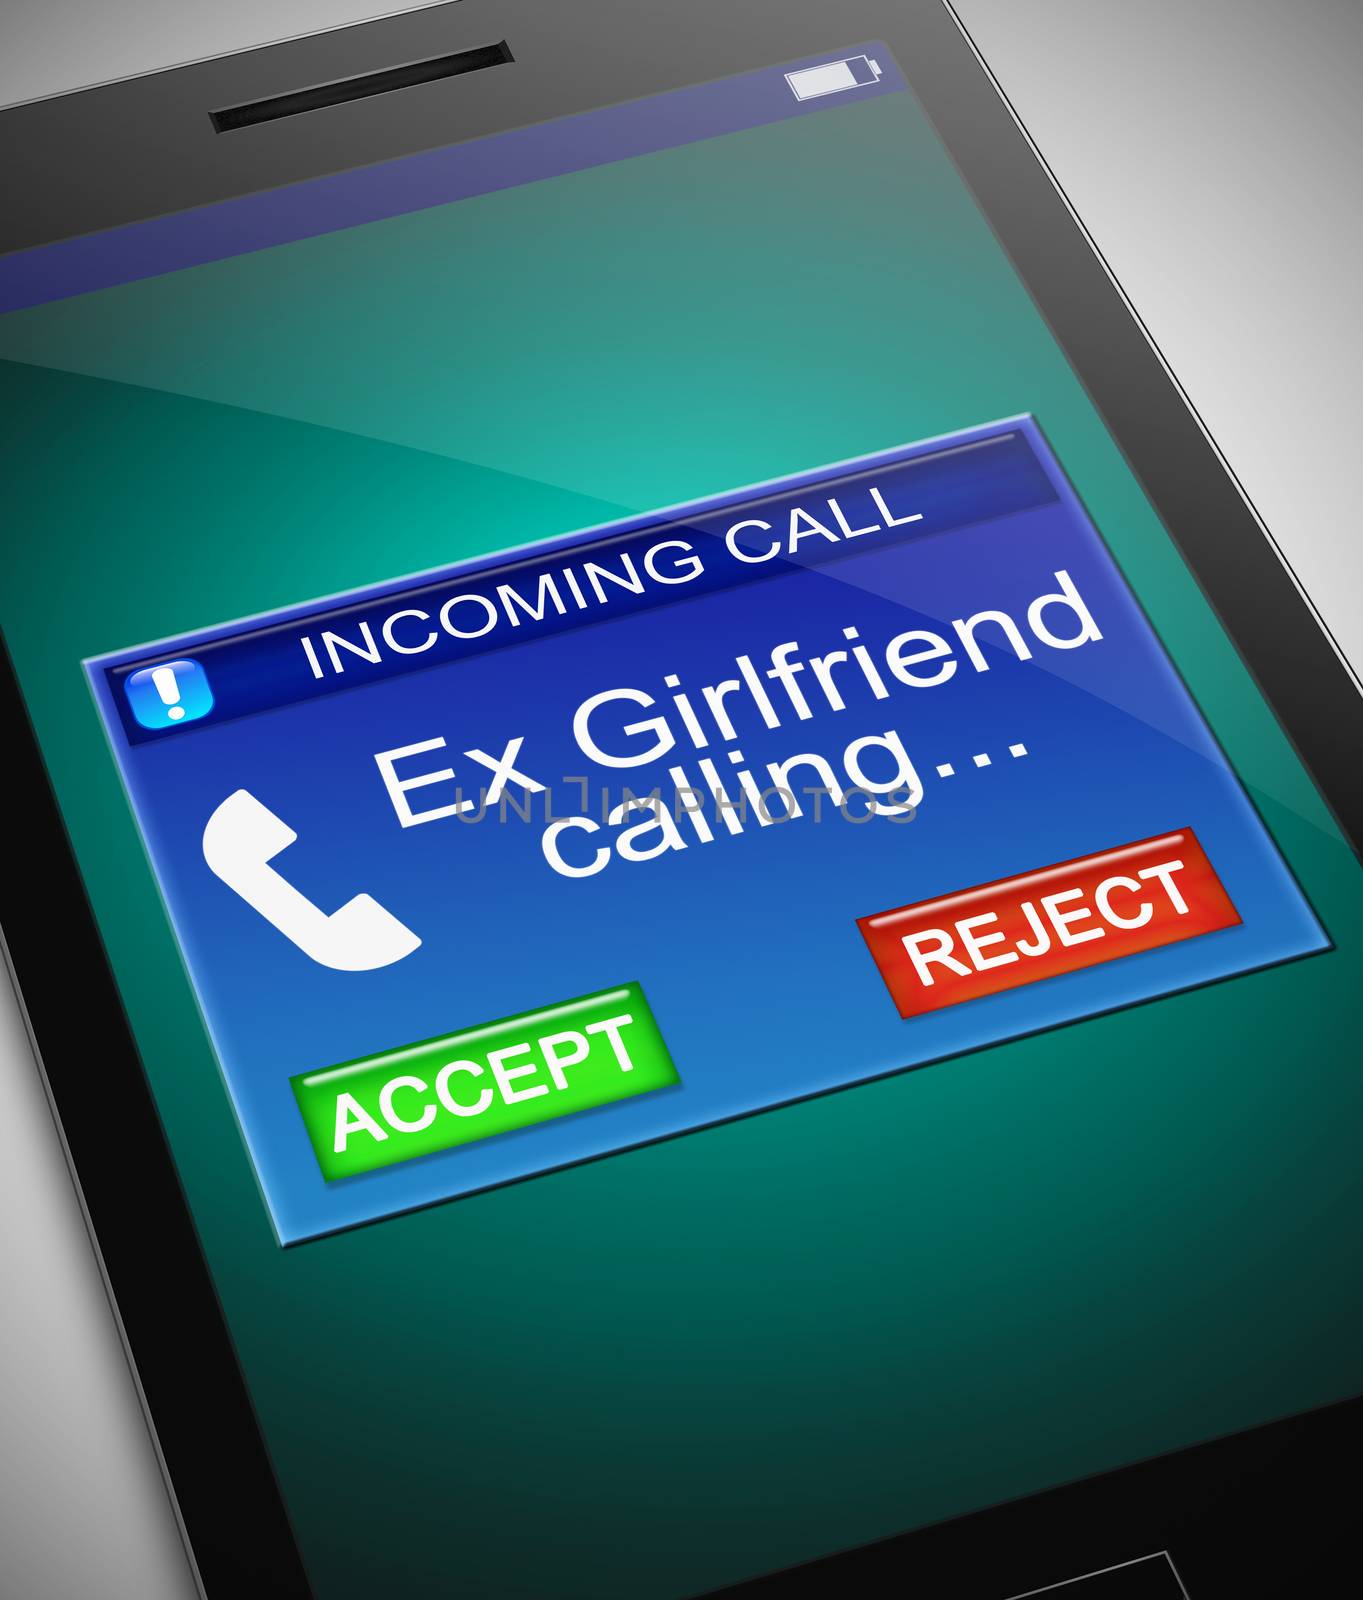 Ex girlfriend calling. by 72soul